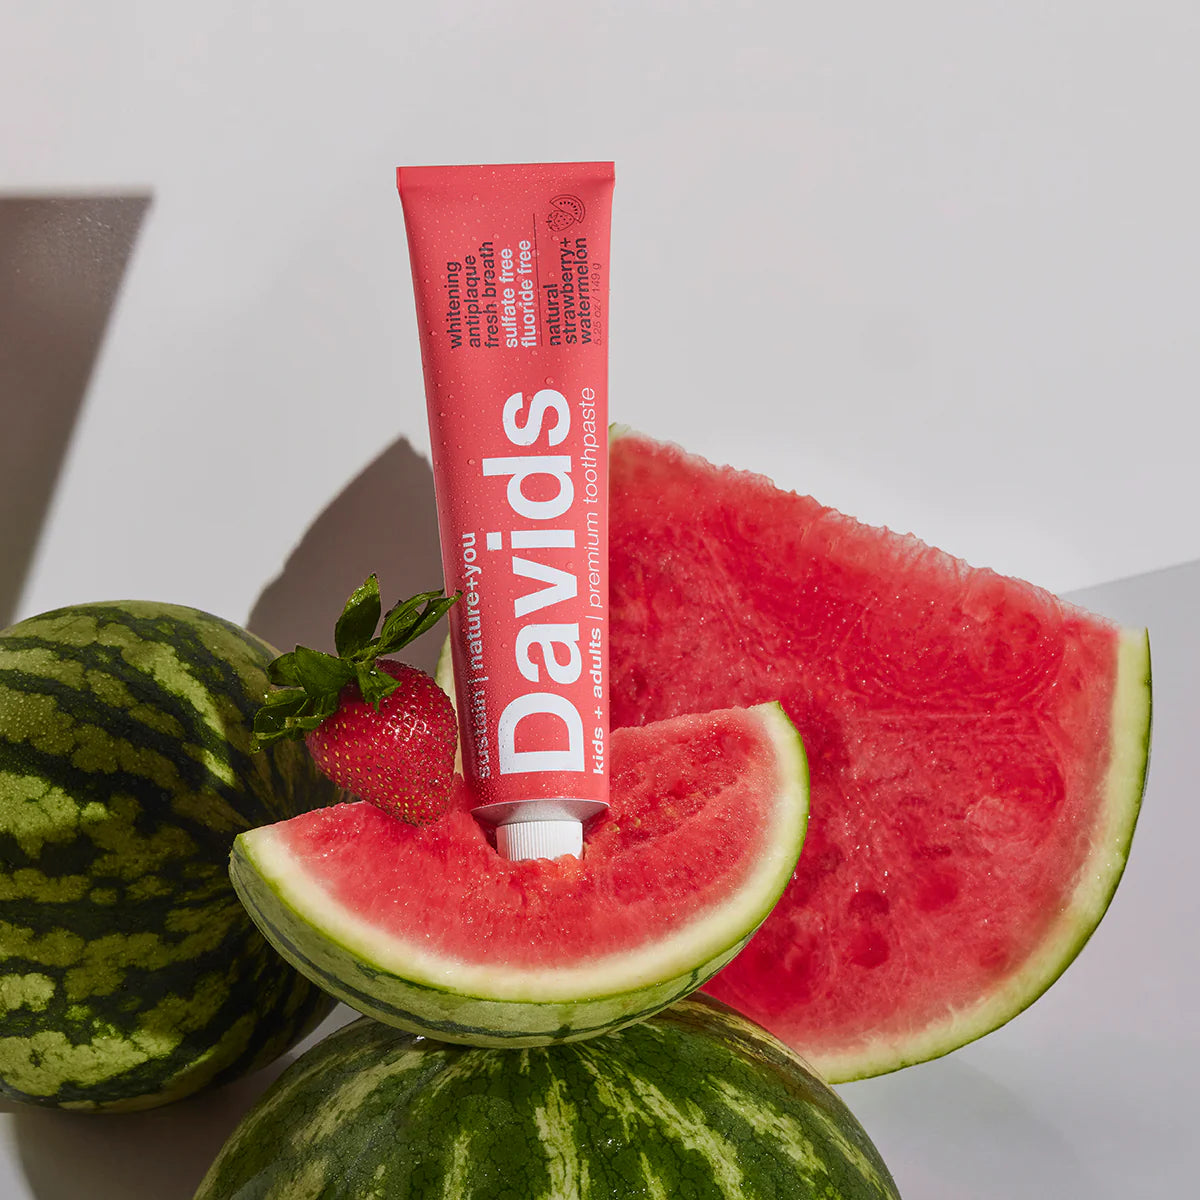 Davids kids + adults premium toothpaste / strawberry watermelon